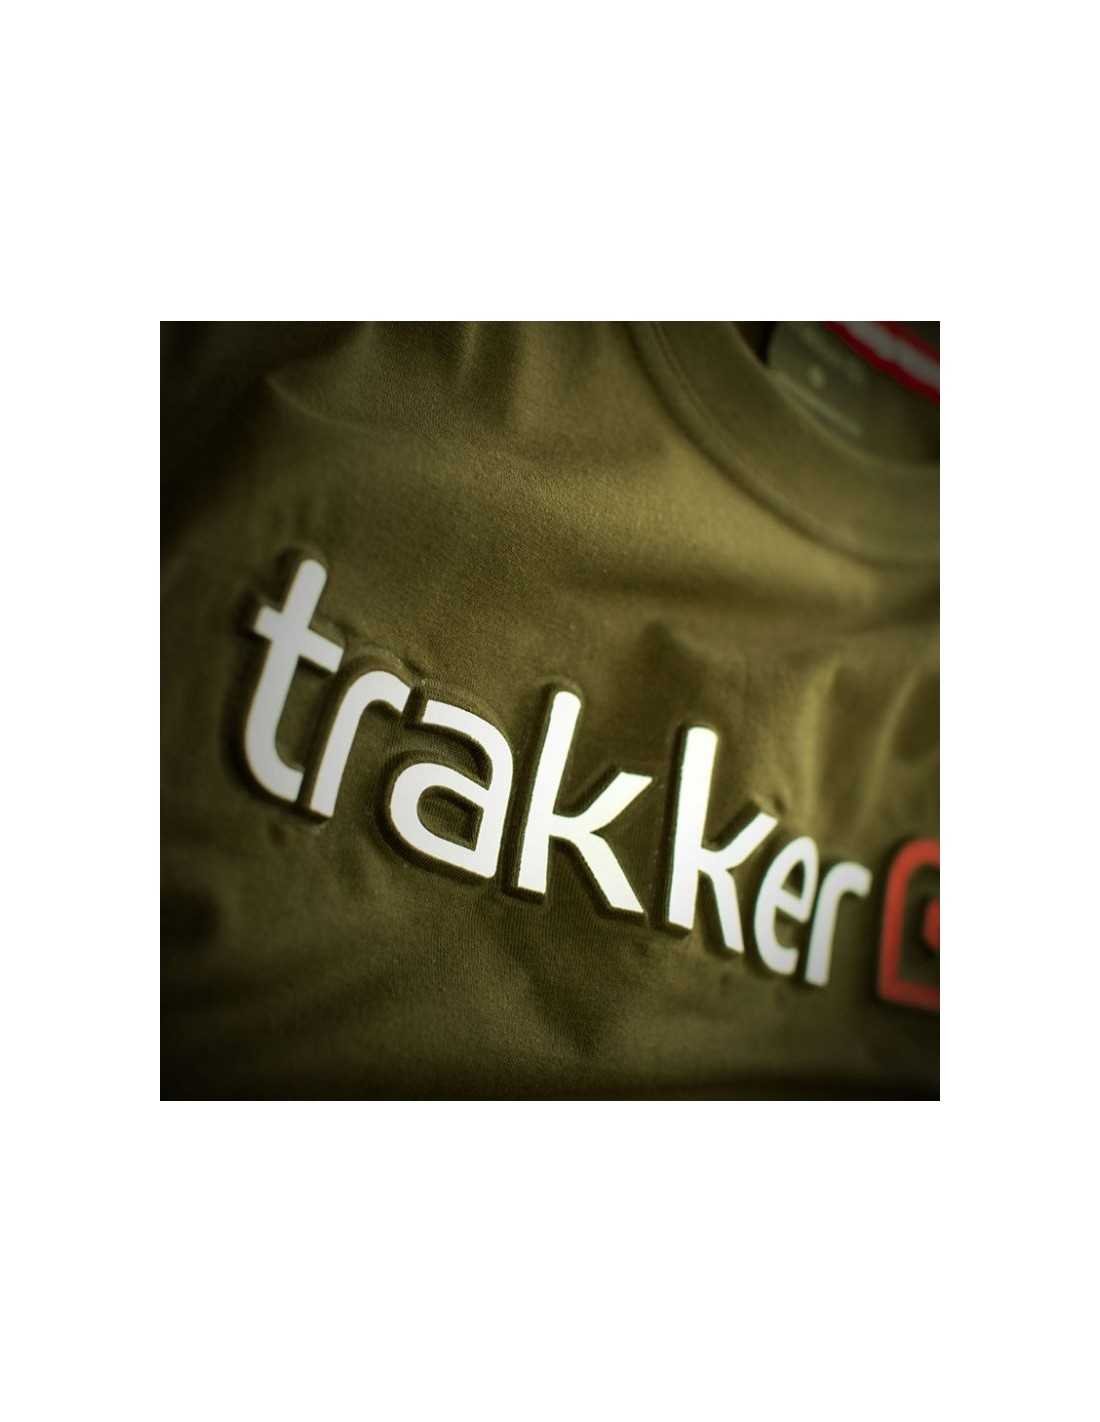 Trakker 3D PRINTED T-SHIRT тениска